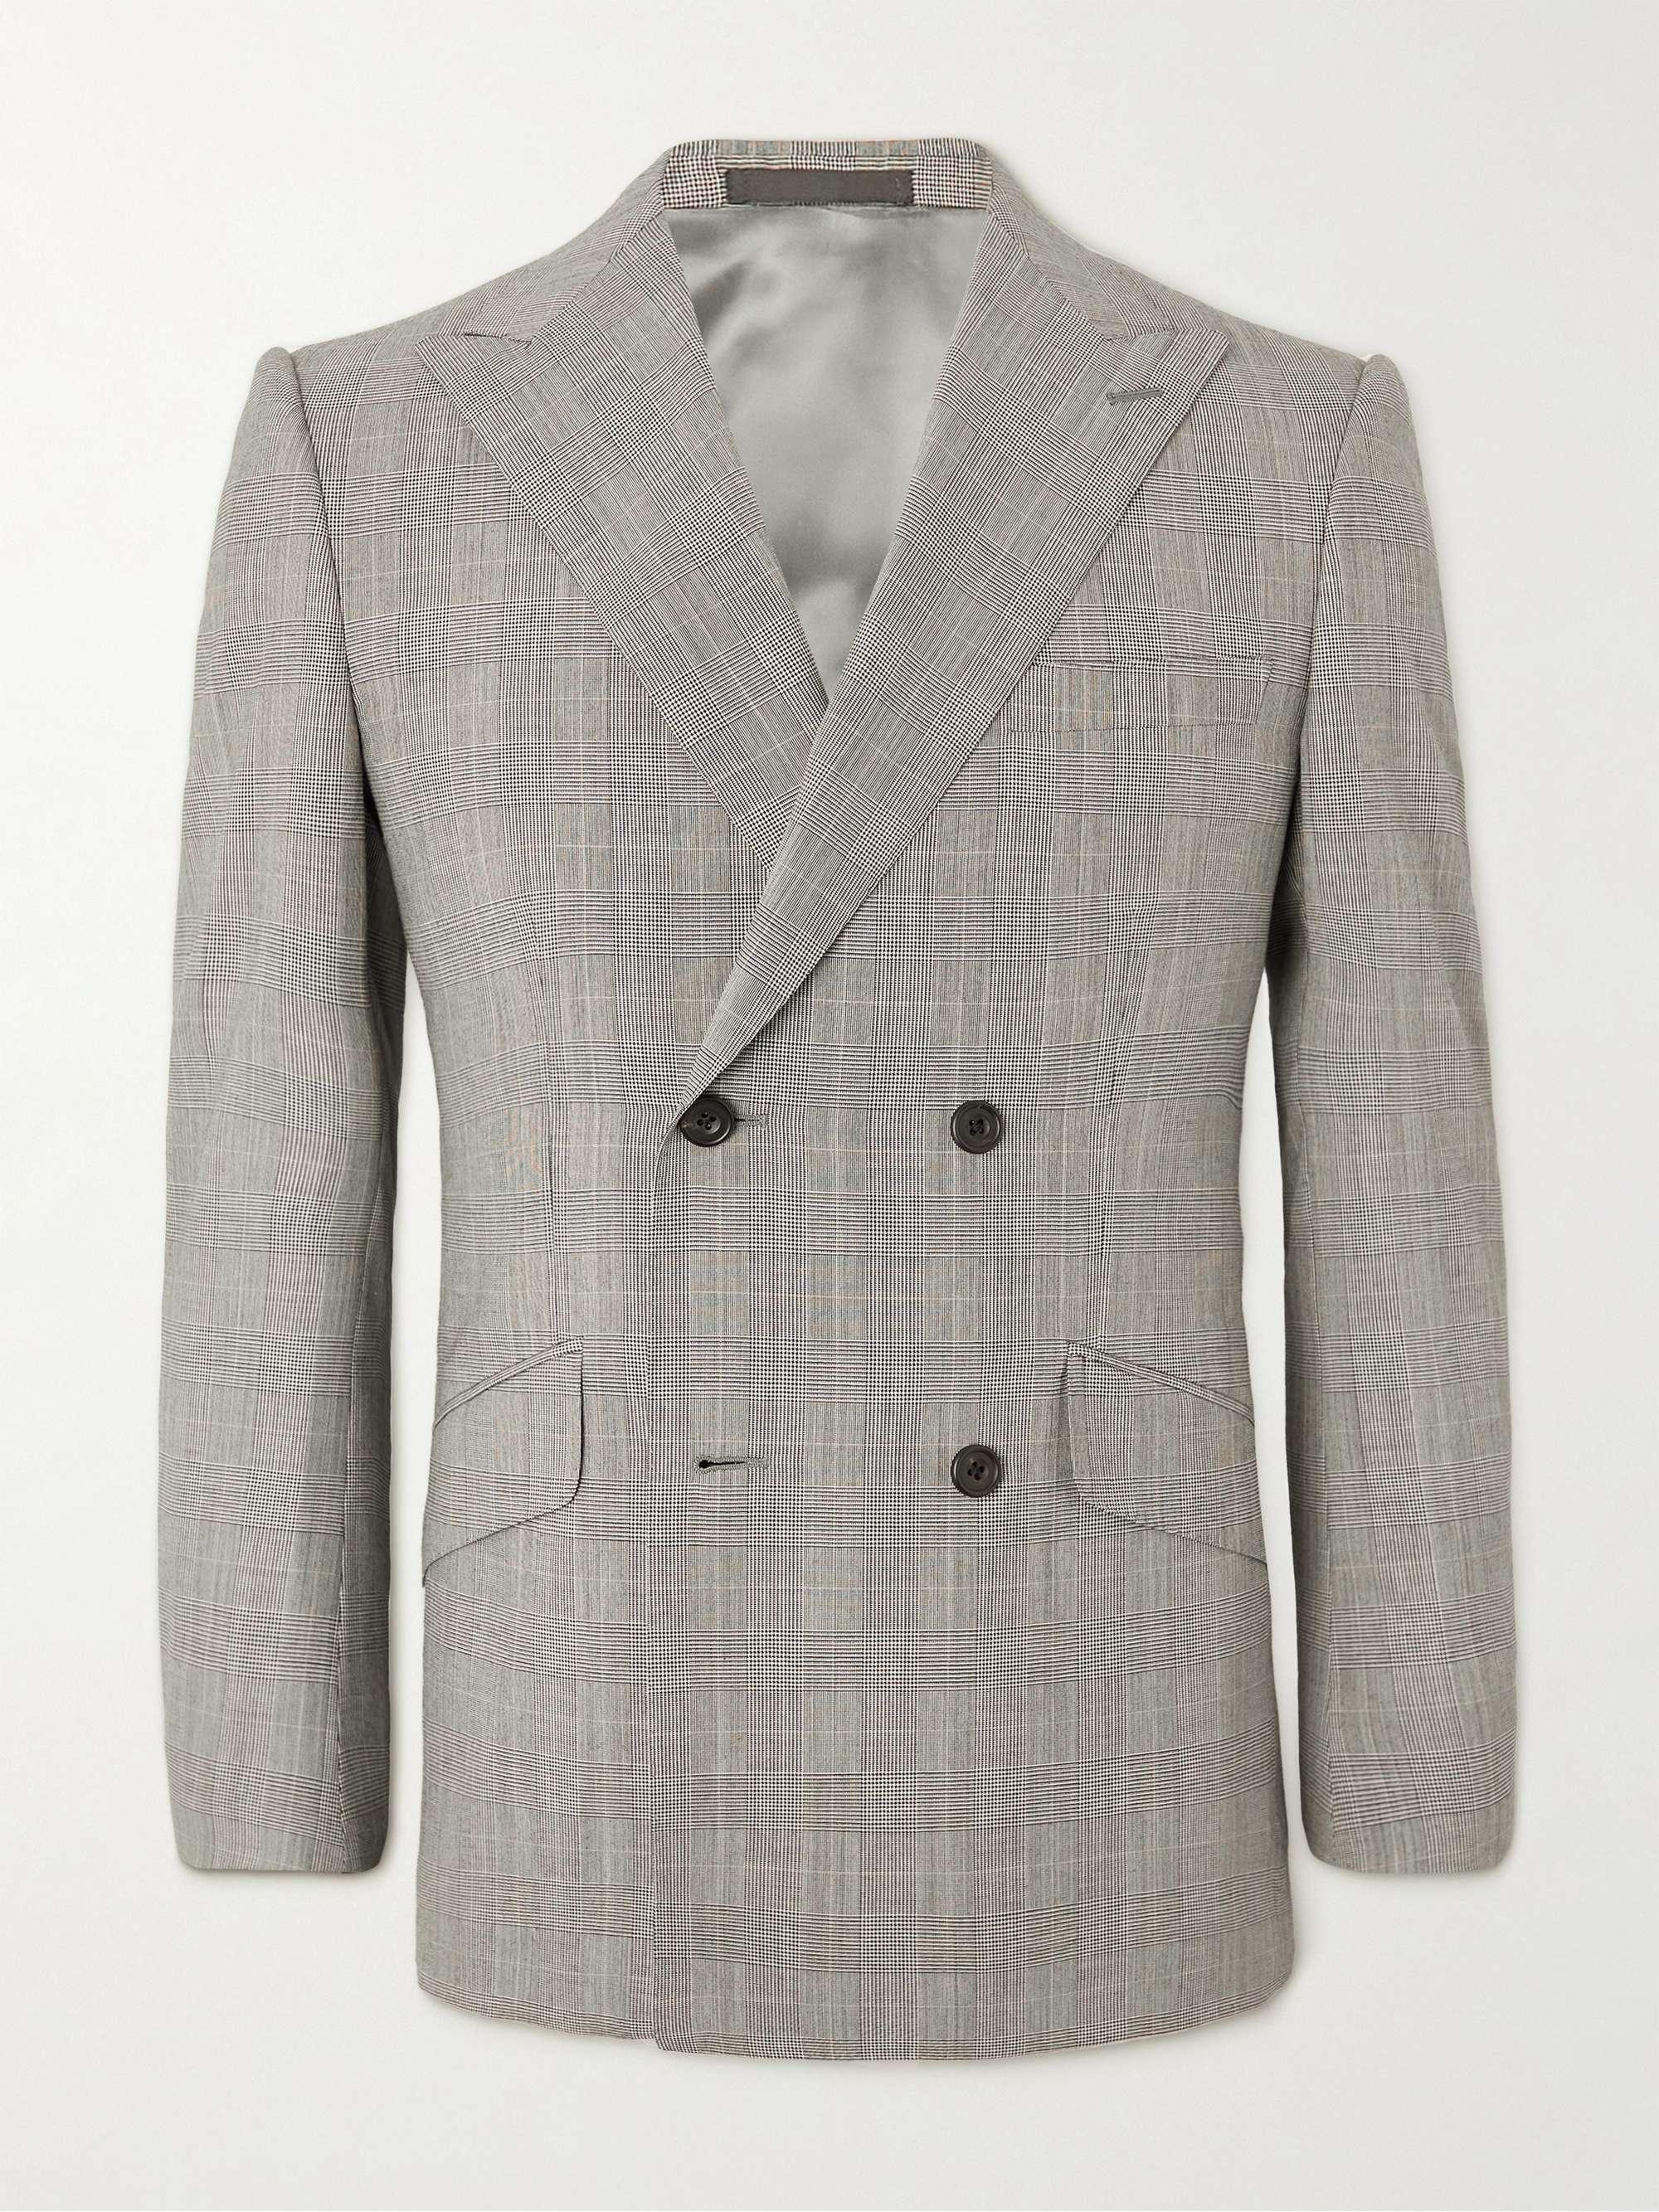 Double-breasted check blazer Farfetch Boys Clothing Jackets Blazers Grey 